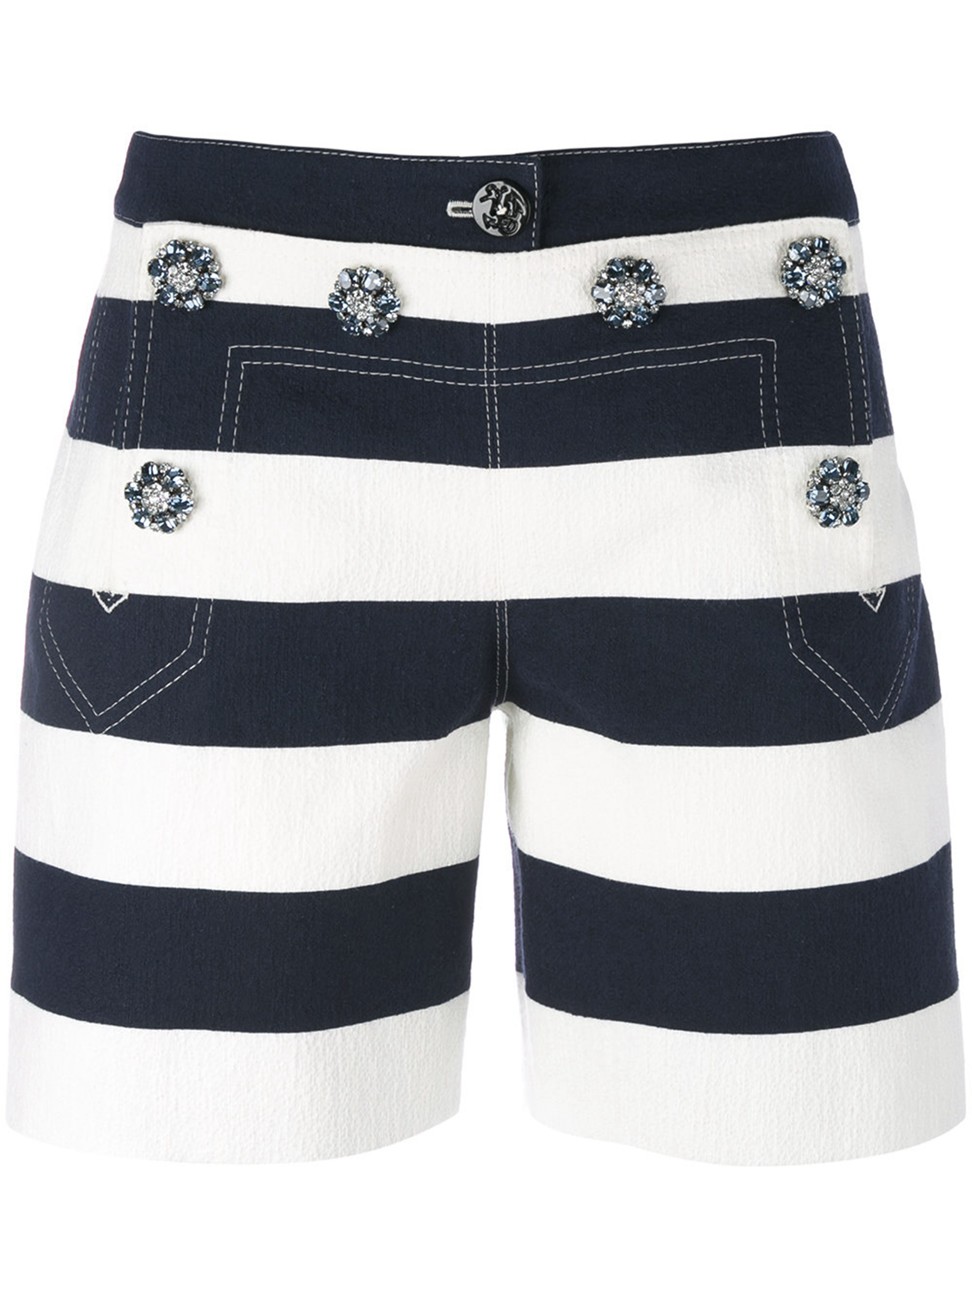 Striped shorts by Dolce & Gabbana.